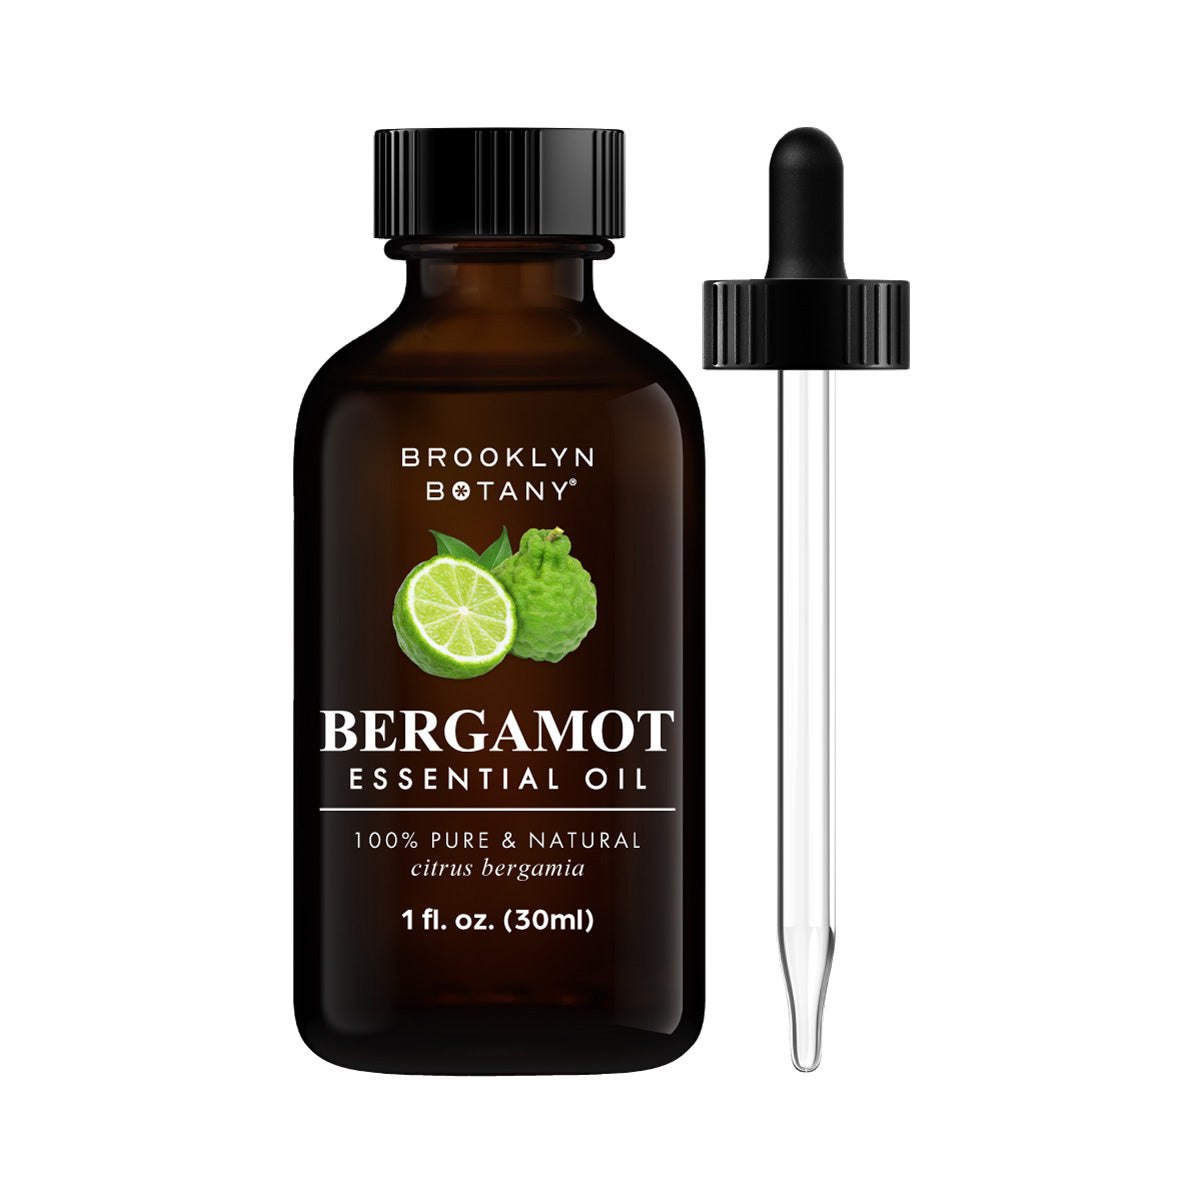 BB-30ml-Bergamot-Essential-Oil-Main-Image-with-Sides-864x2000_3.jpg